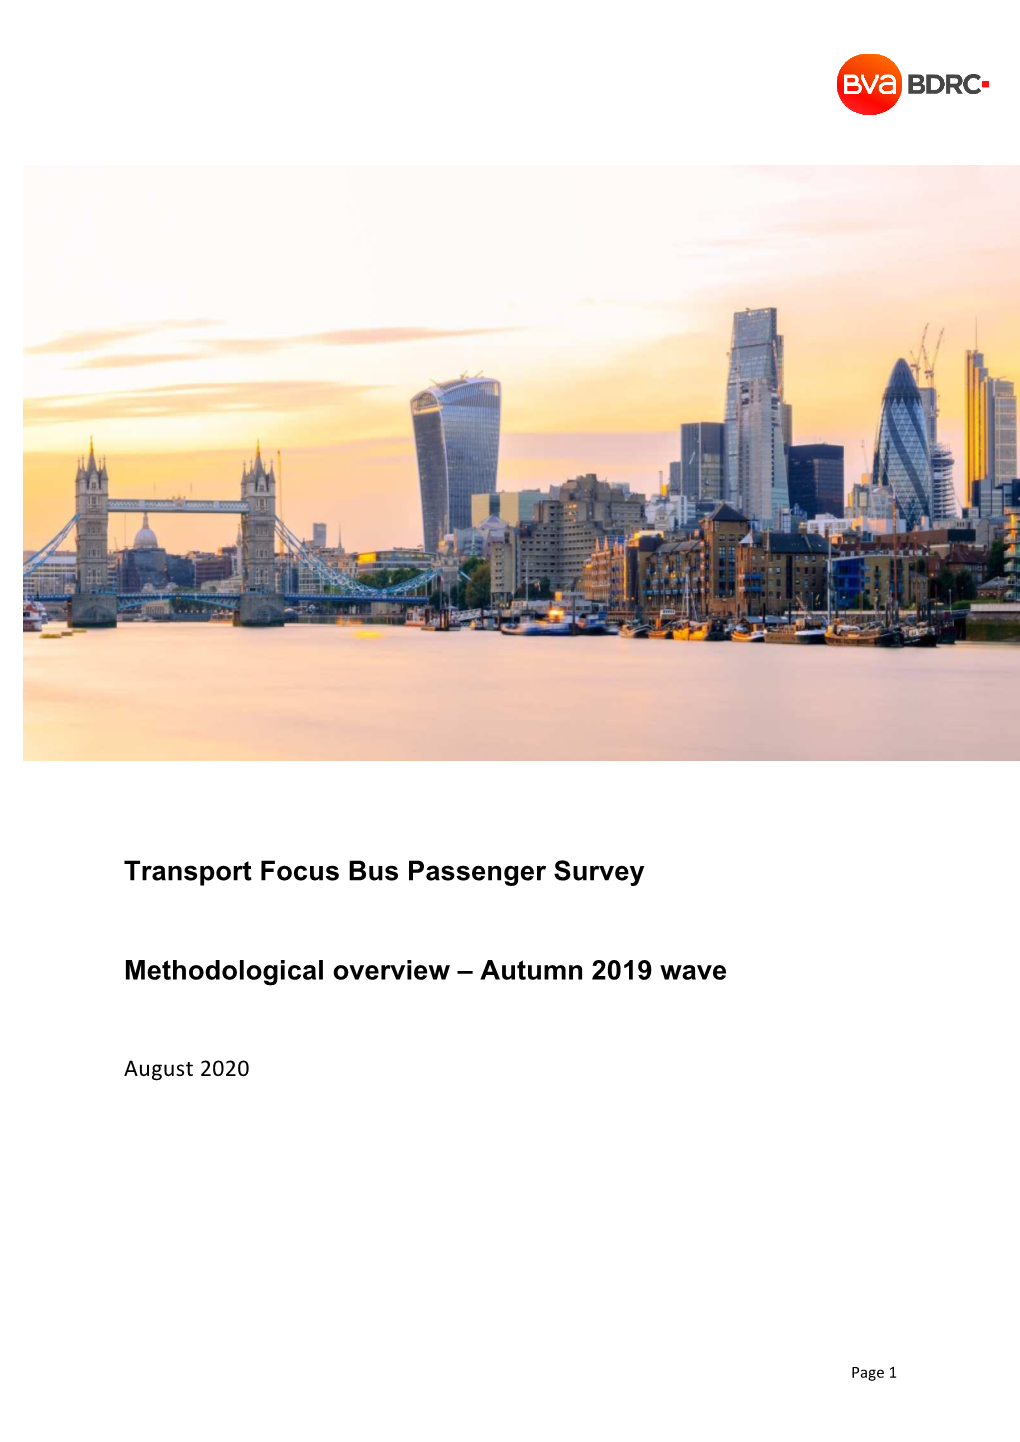 Transport Focus Bus Passenger Survey Methodological Overview